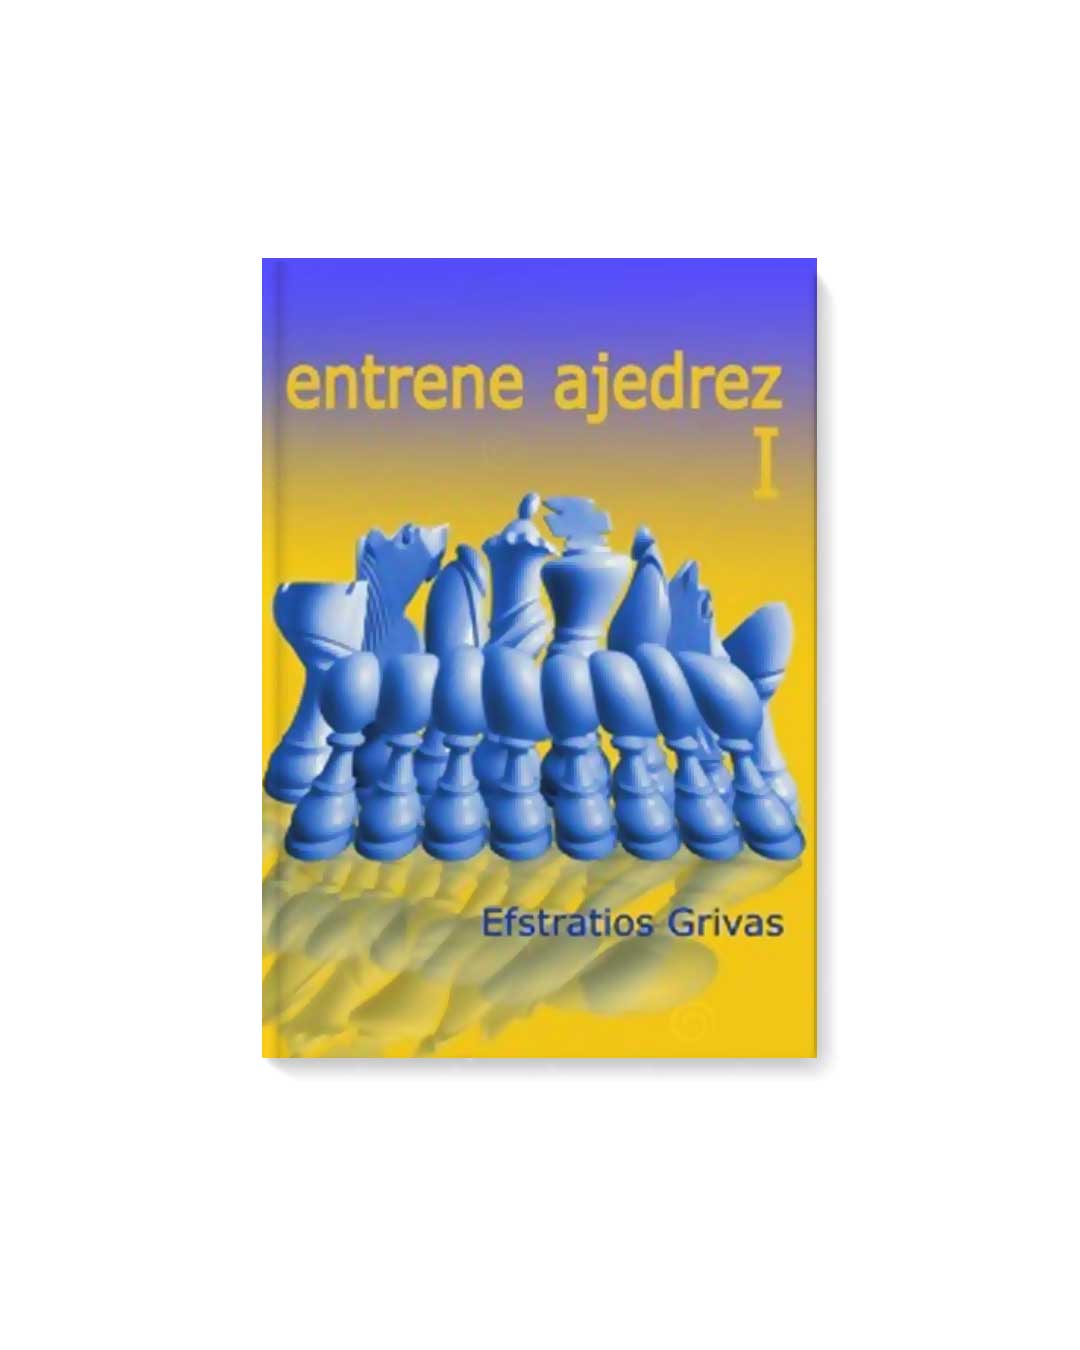 Entrene ajedrez vol 1 - Grivas